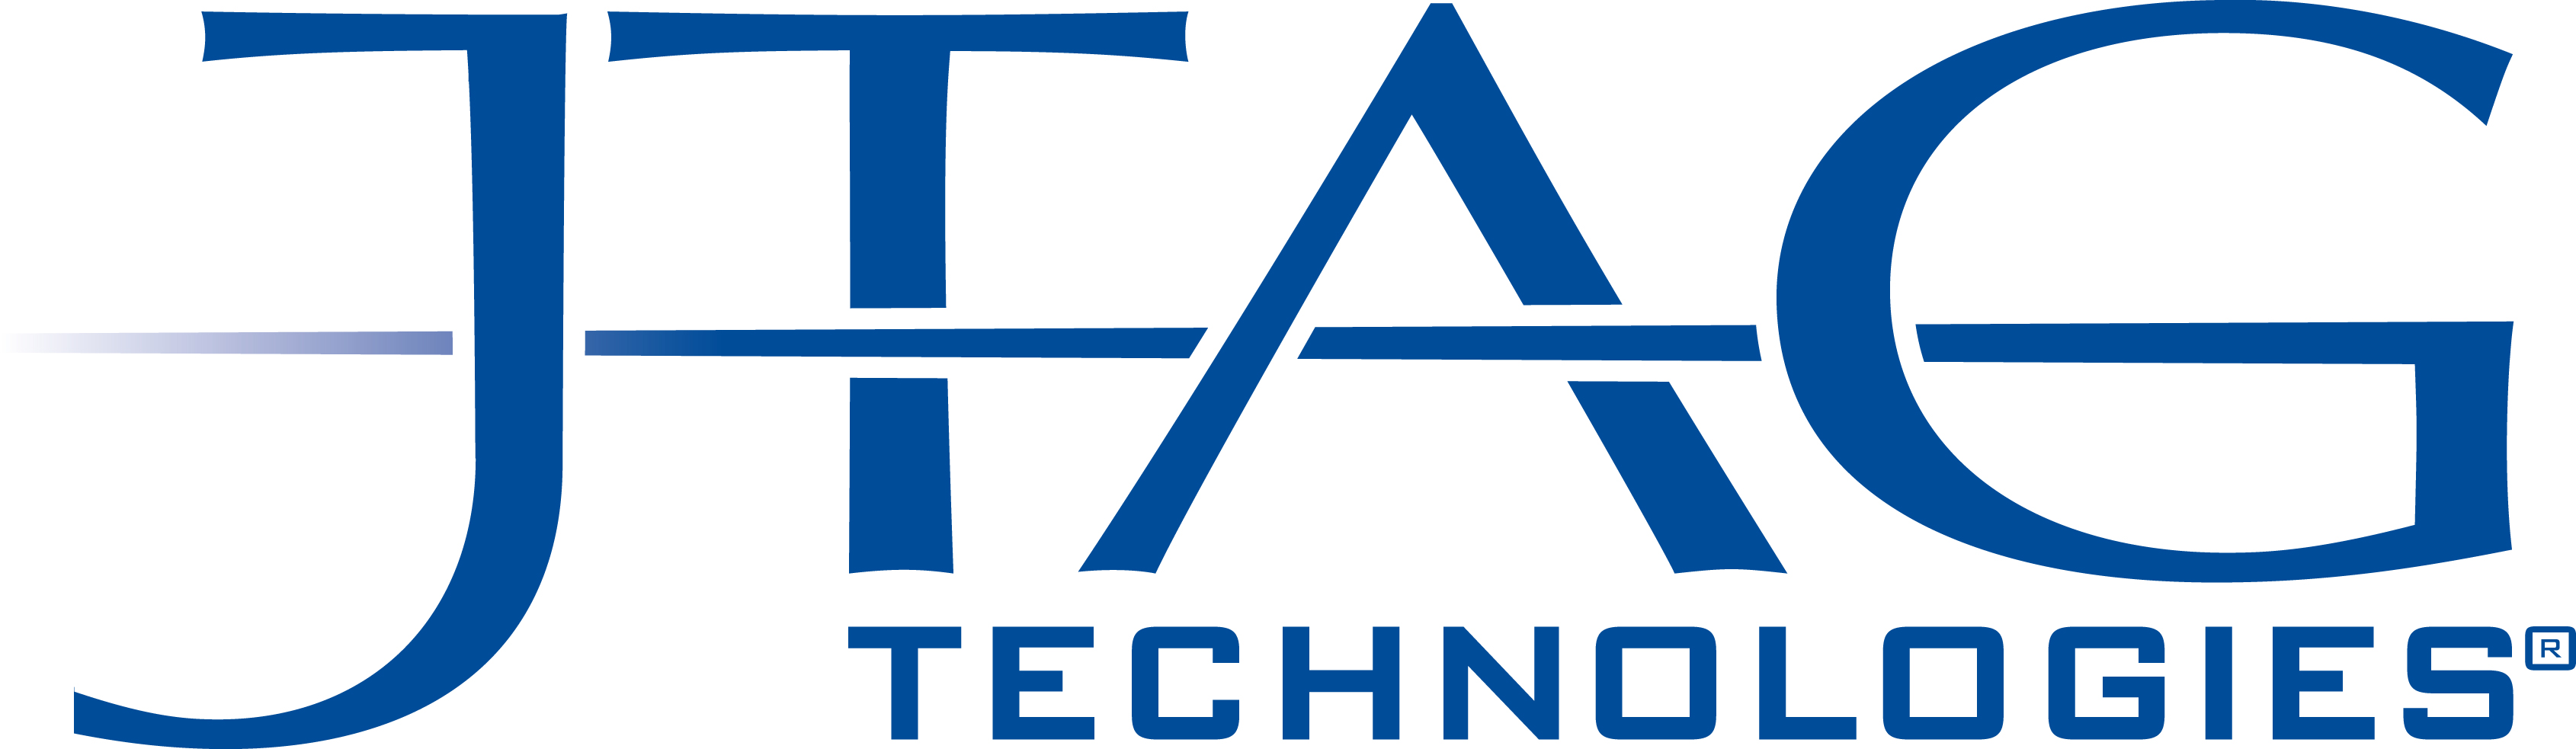 JTAG Technologies